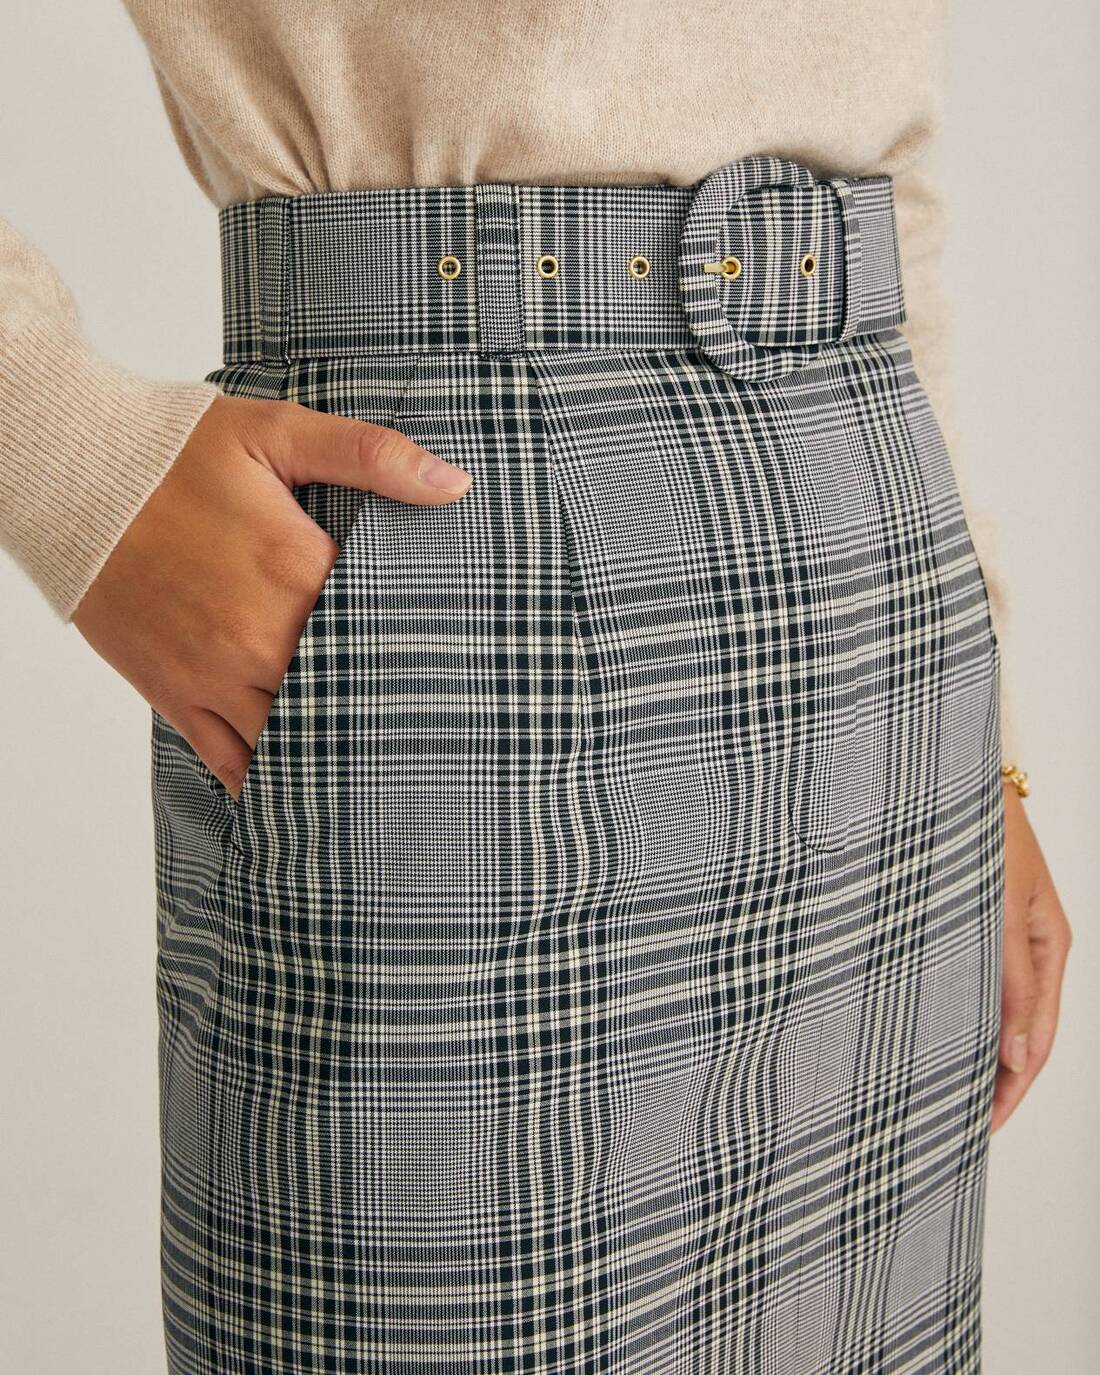 Costume mini skirt with a belt